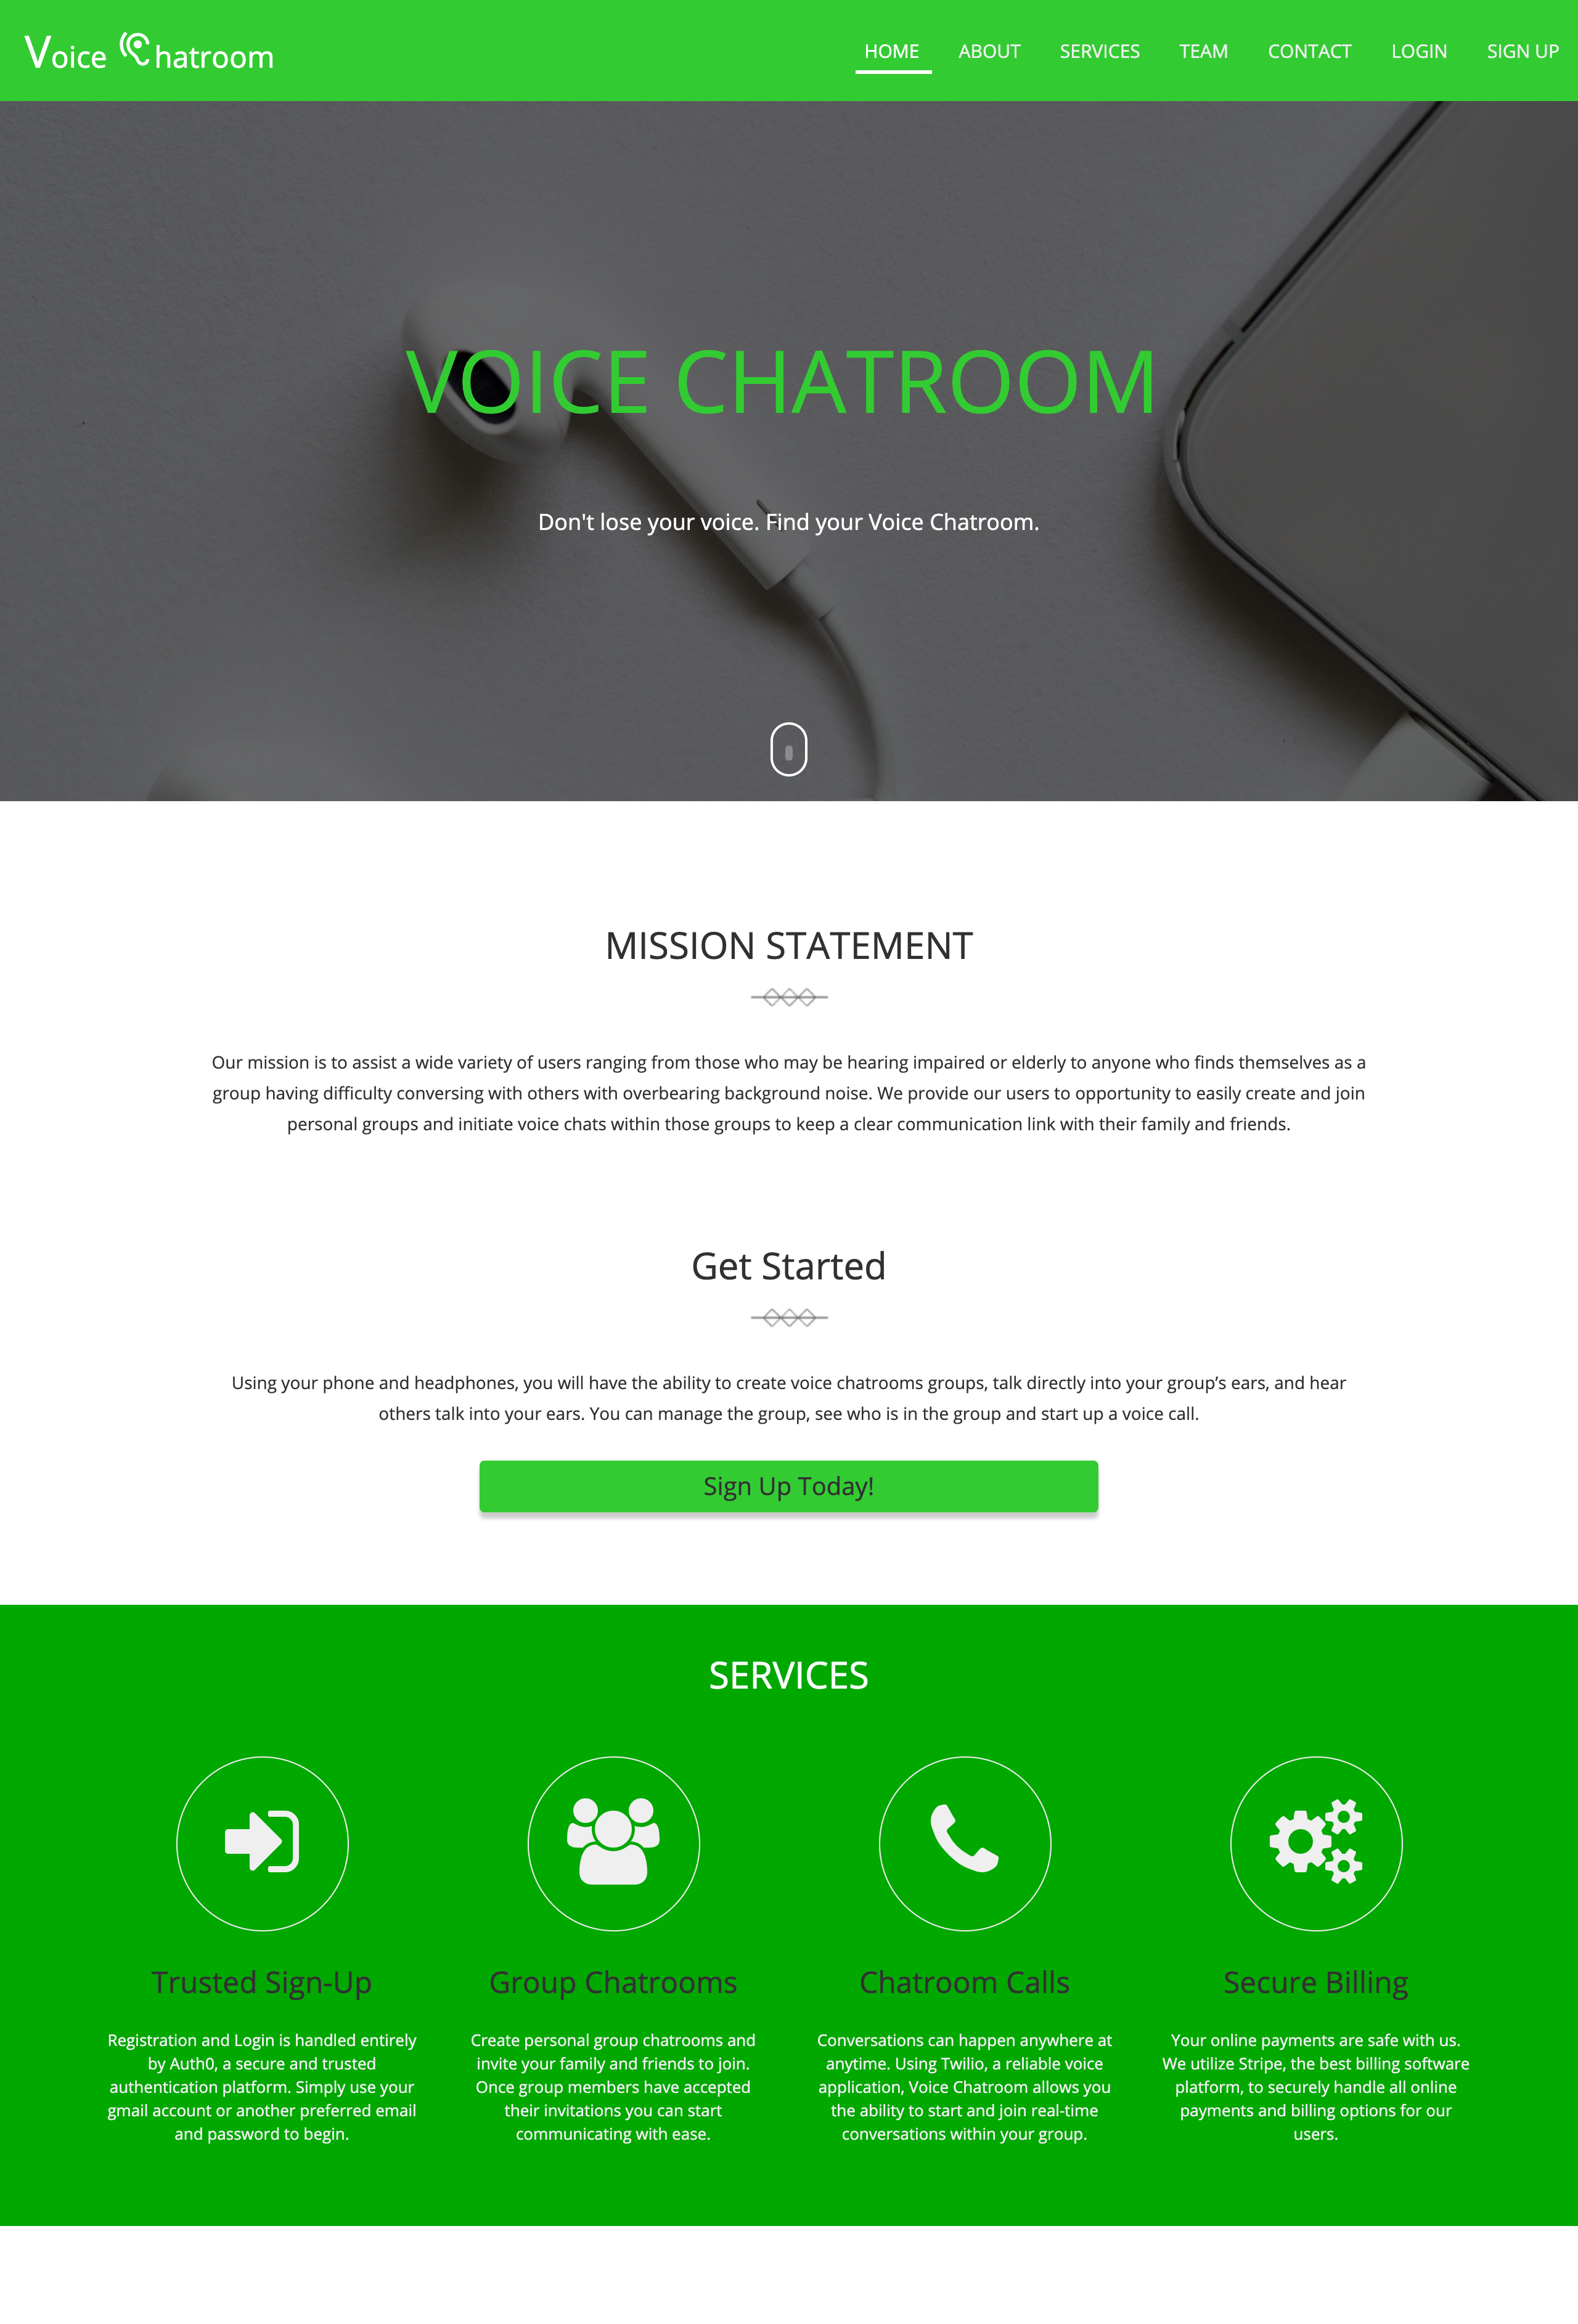 Voice Chatroom web application